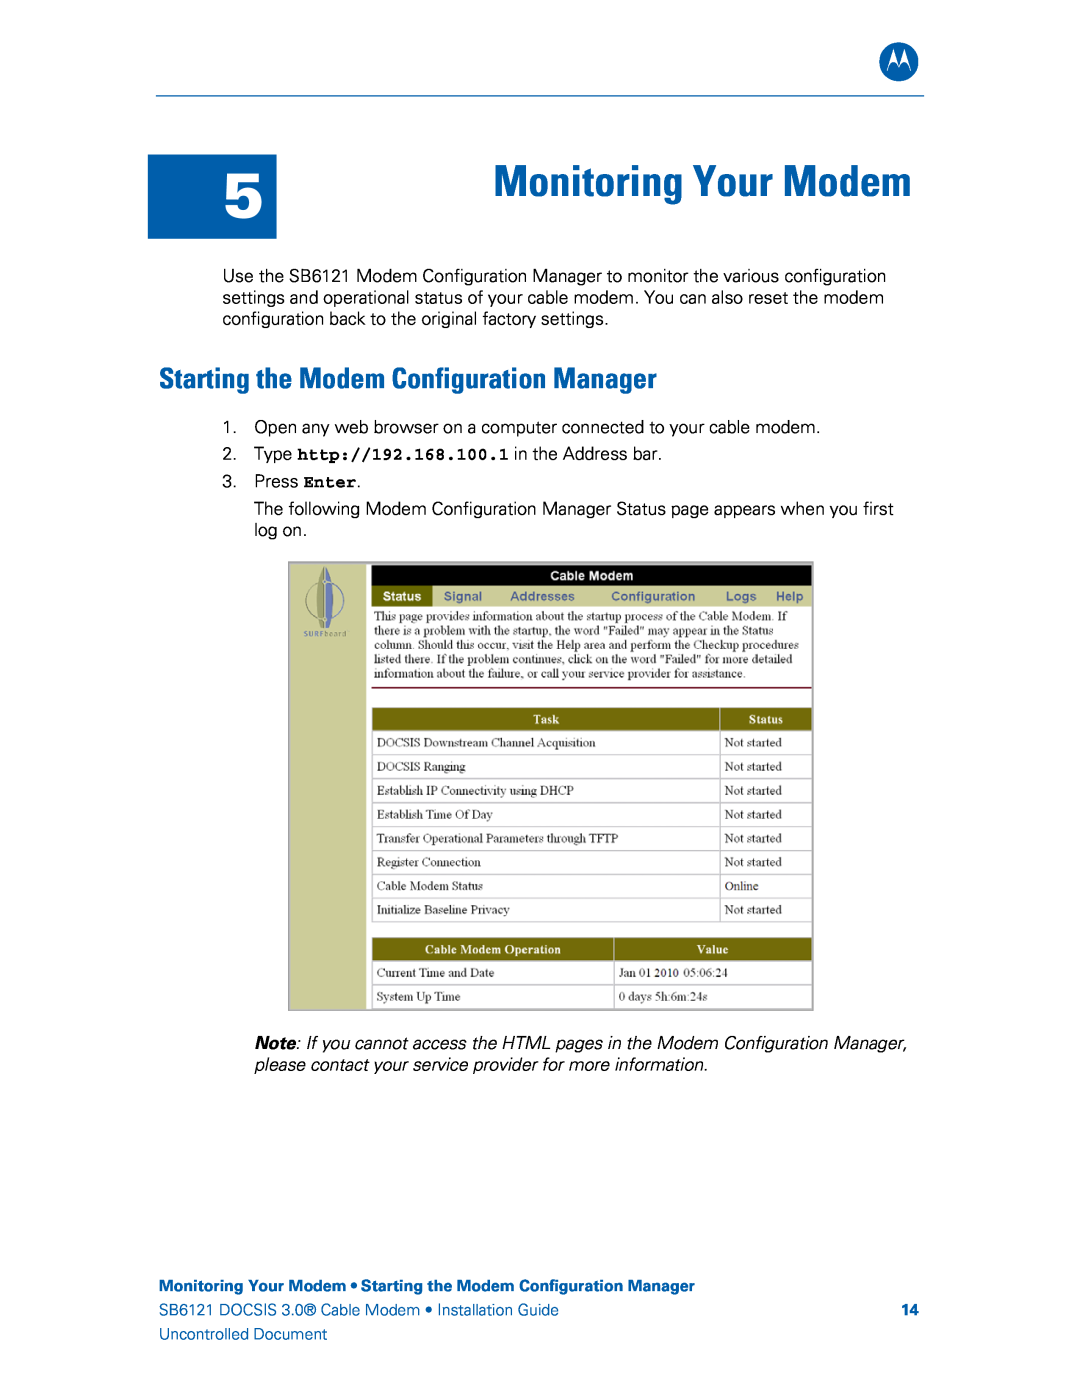 Motorola SB6121, 575319-019-00 manual Monitoring Your Modem, Starting the Modem Configuration Manager 